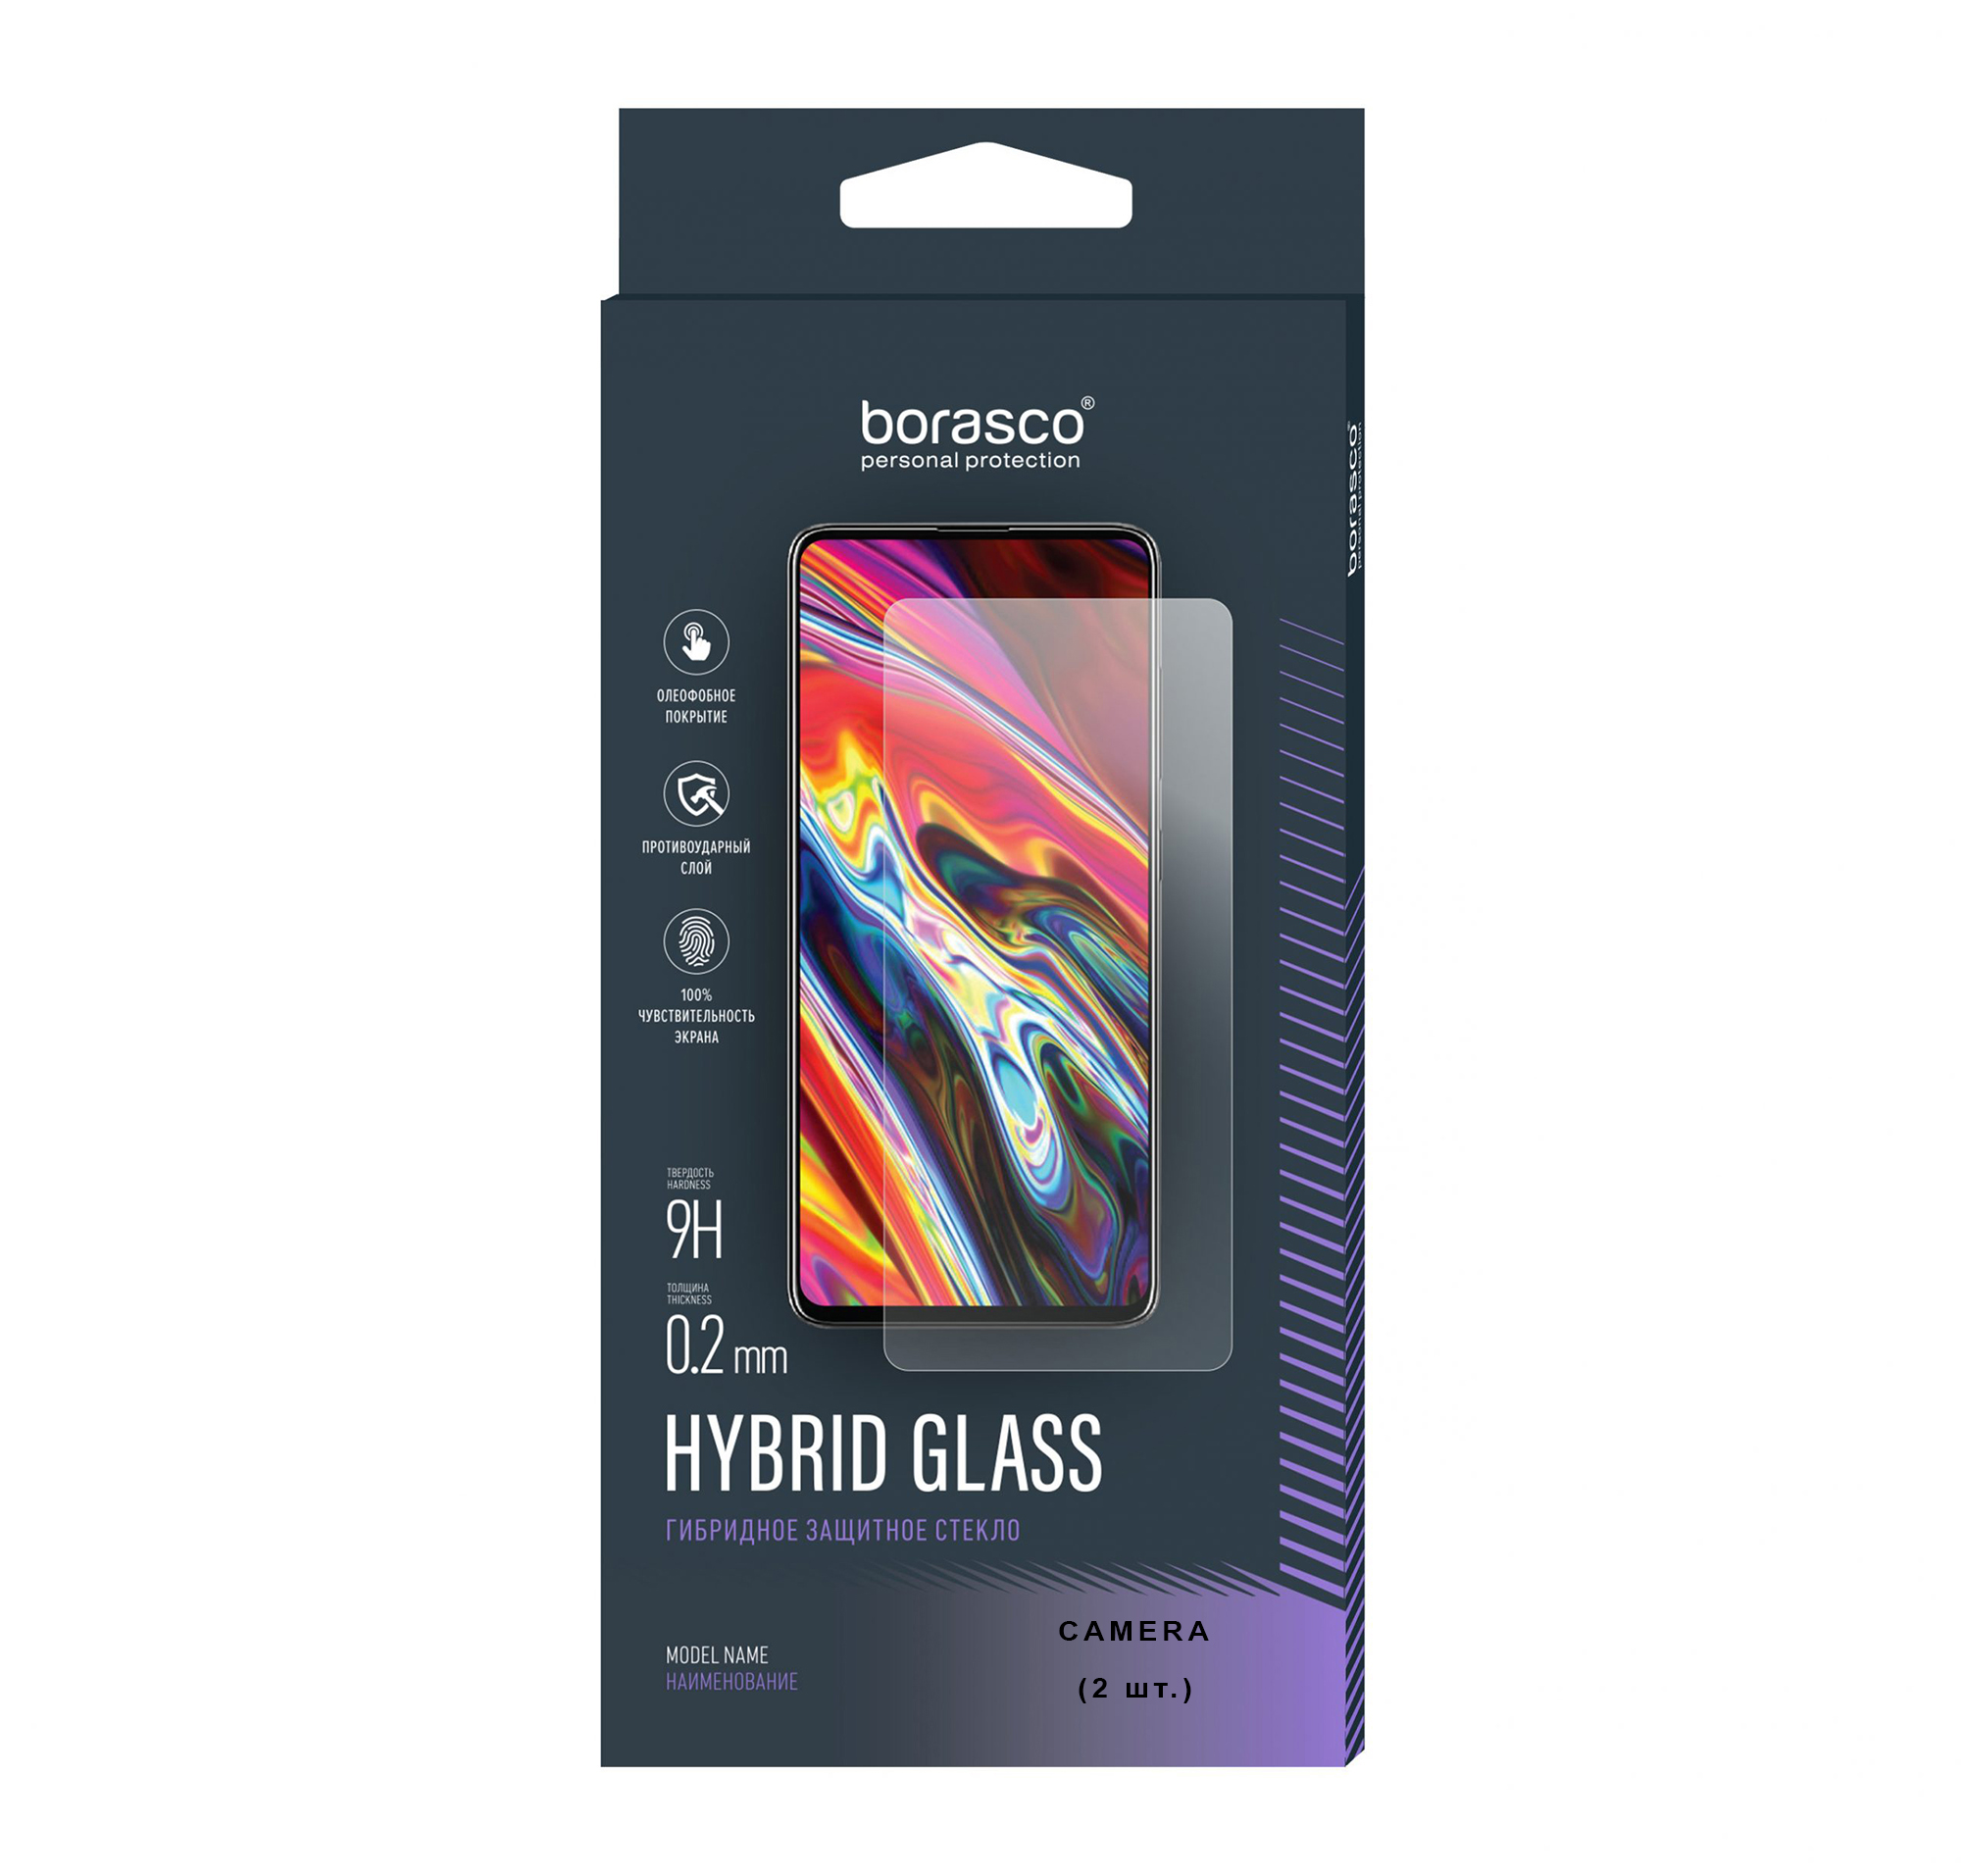 Защитное стекло (Экран+Камера) Hybrid Glass для Honor 9X Premium защитное стекло с полным покрытием для honor 9x huawei honor 9x lite huawei honor 9x pro закаленное стекло